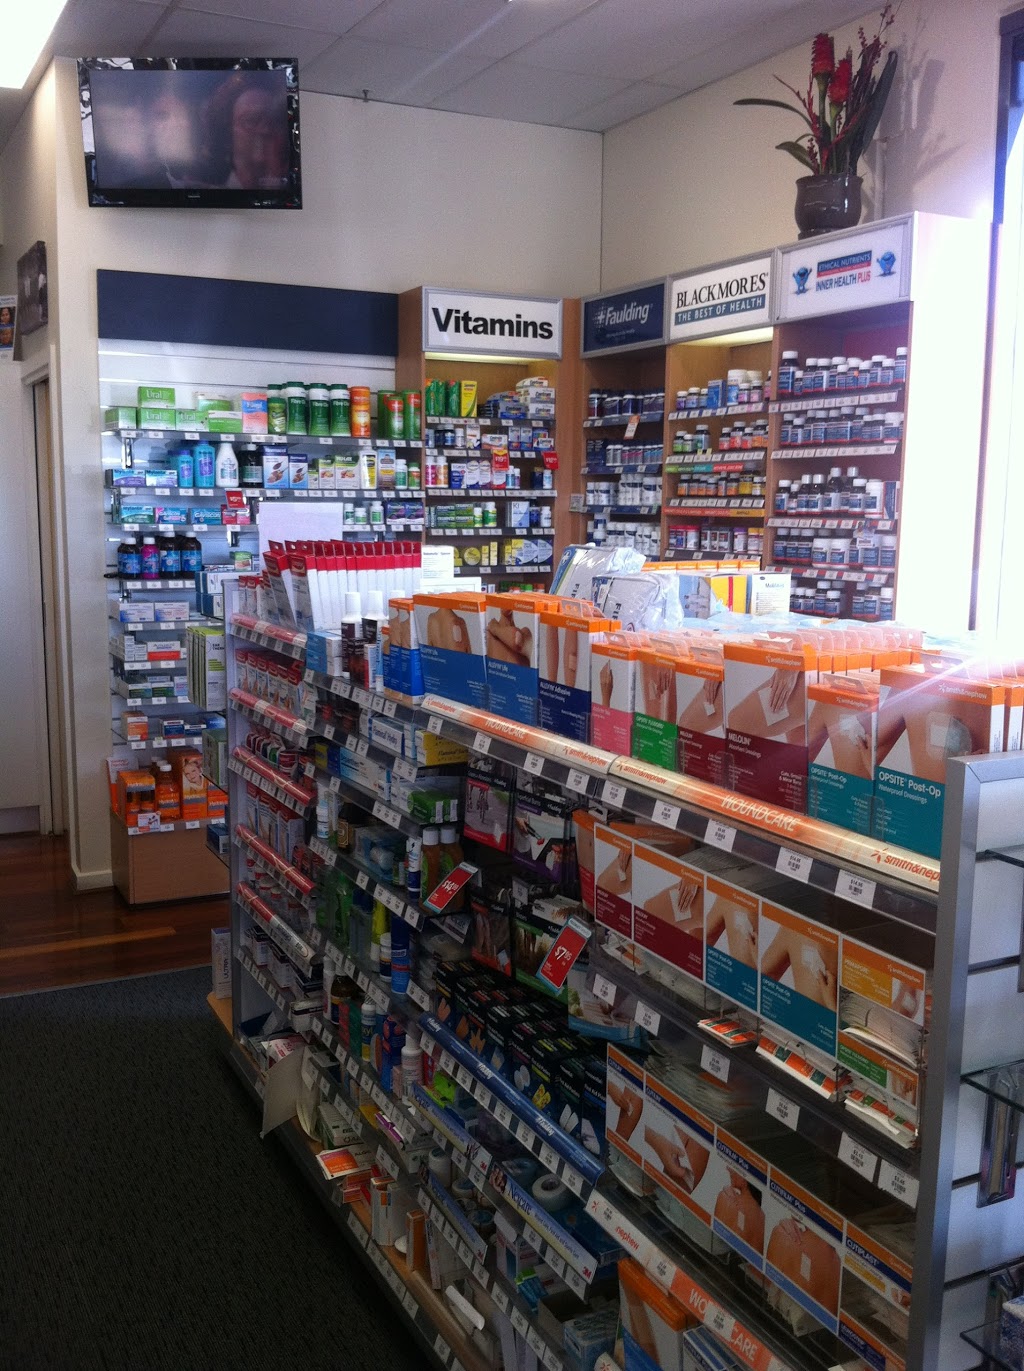 Moama Village Pharmacy | health | 2 Perricoota Rd, Moama NSW 2731, Australia | 0354809555 OR +61 3 5480 9555